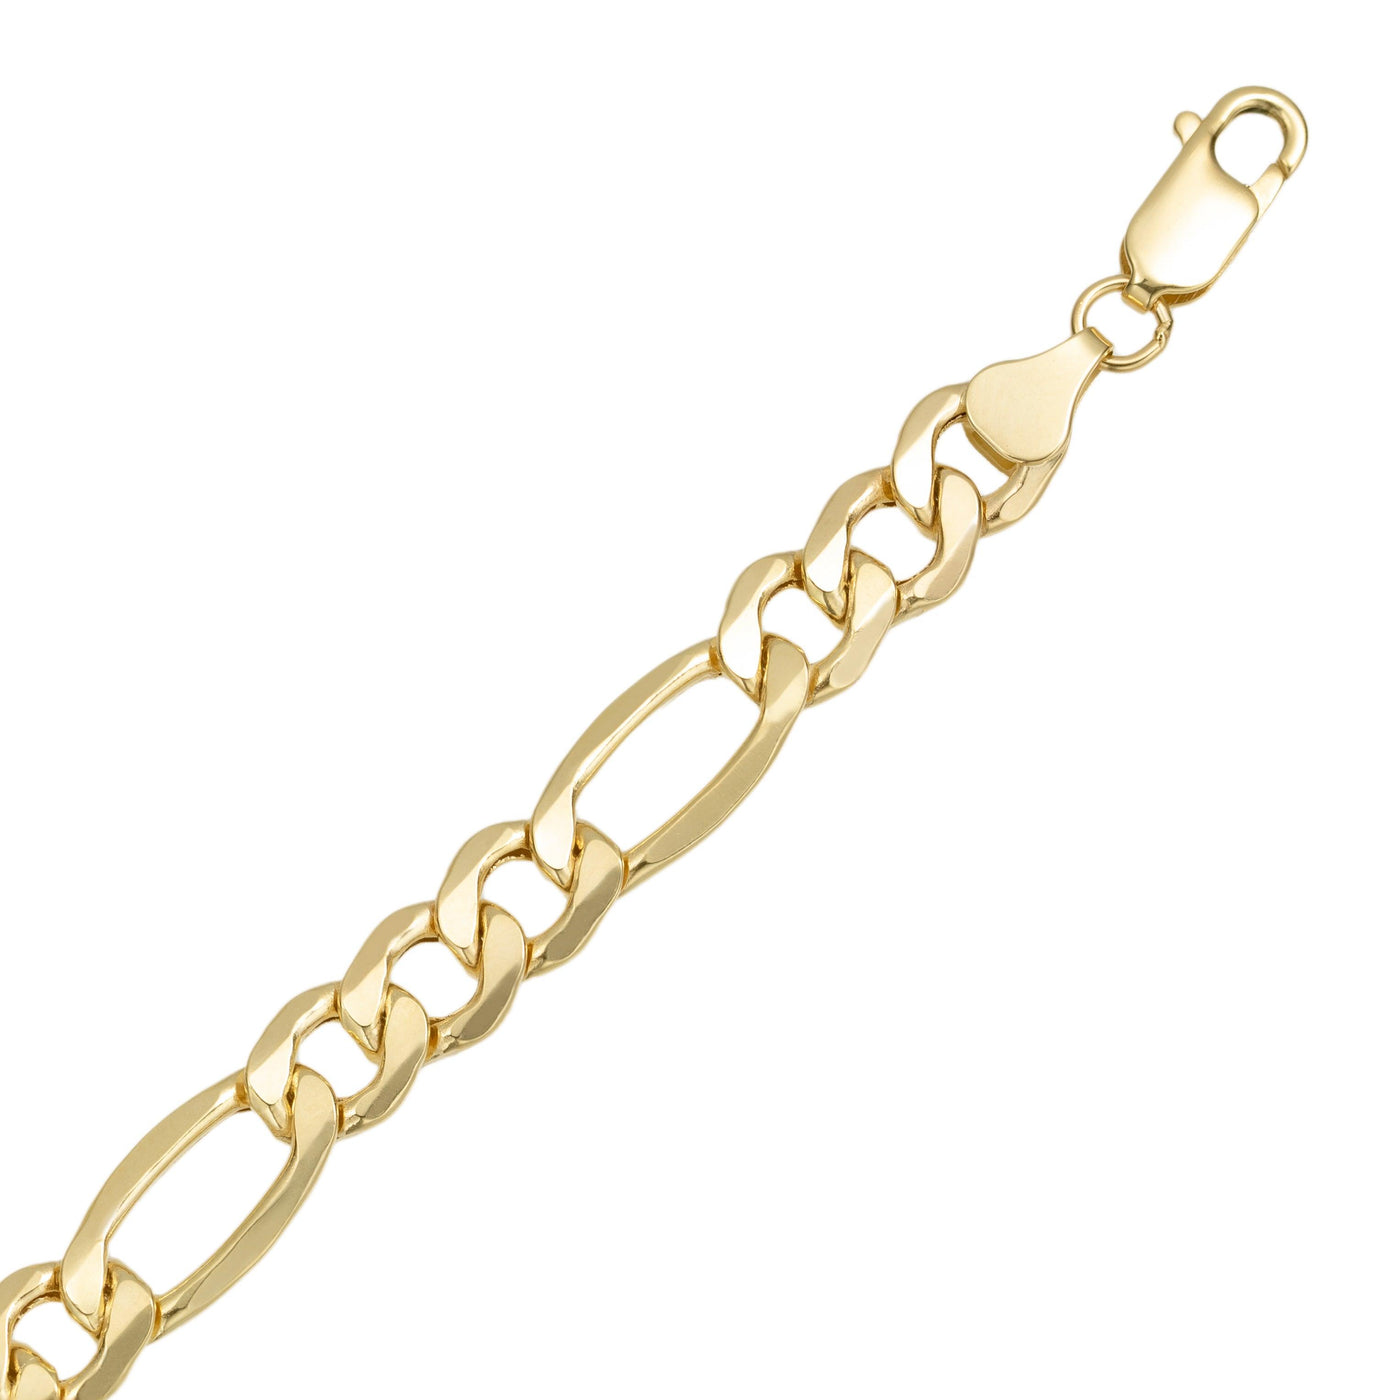 Women's Figaro Link Bracelet 10K Yellow Gold - Hollow - bayamjewelry